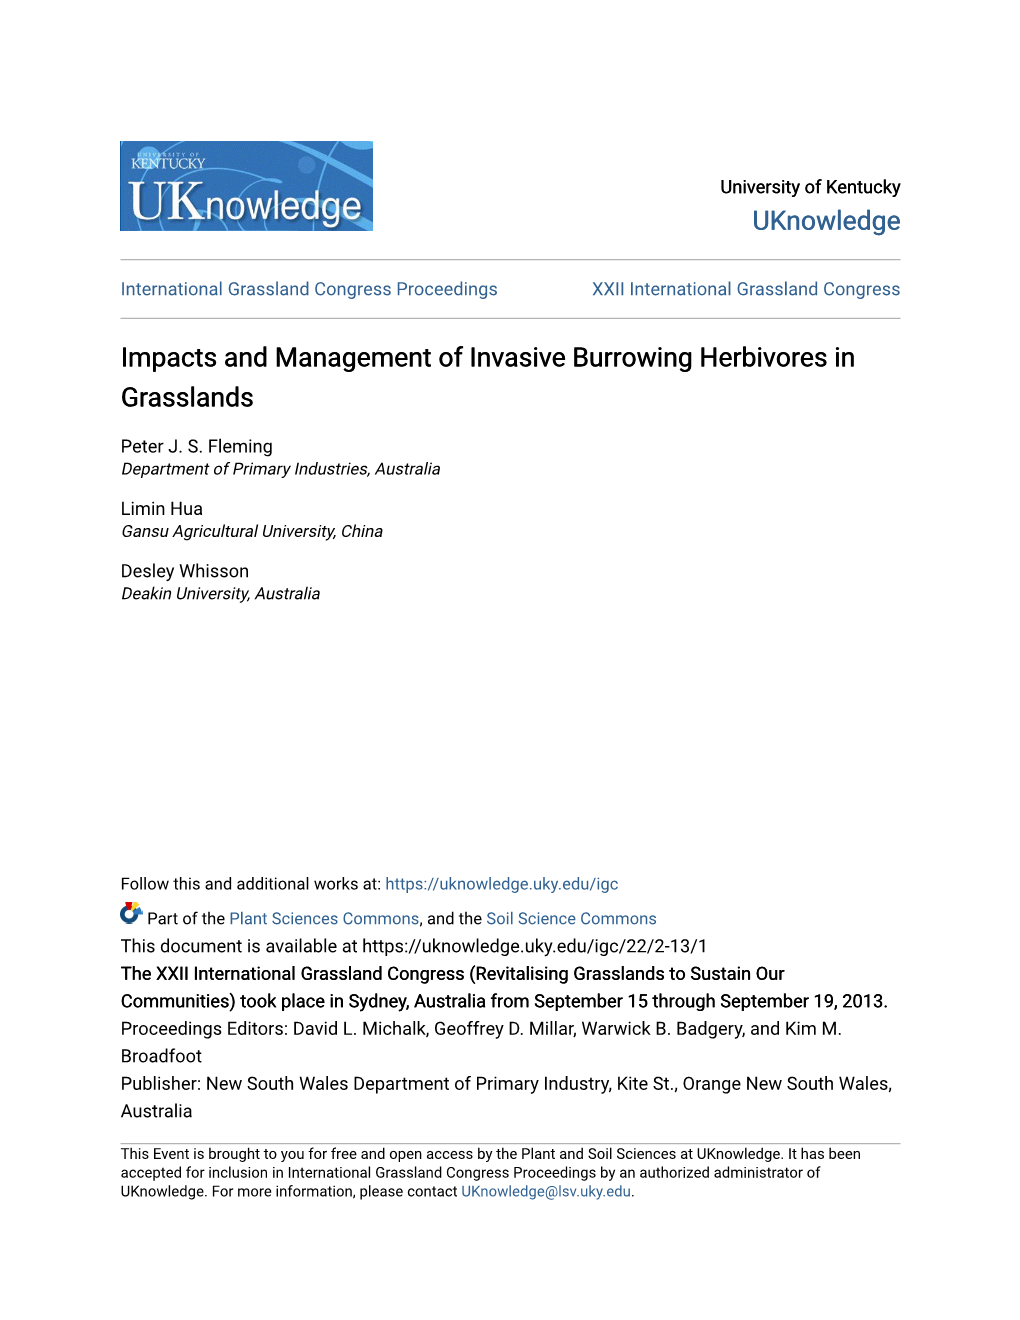 Impacts and Management of Invasive Burrowing Herbivores in Grasslands